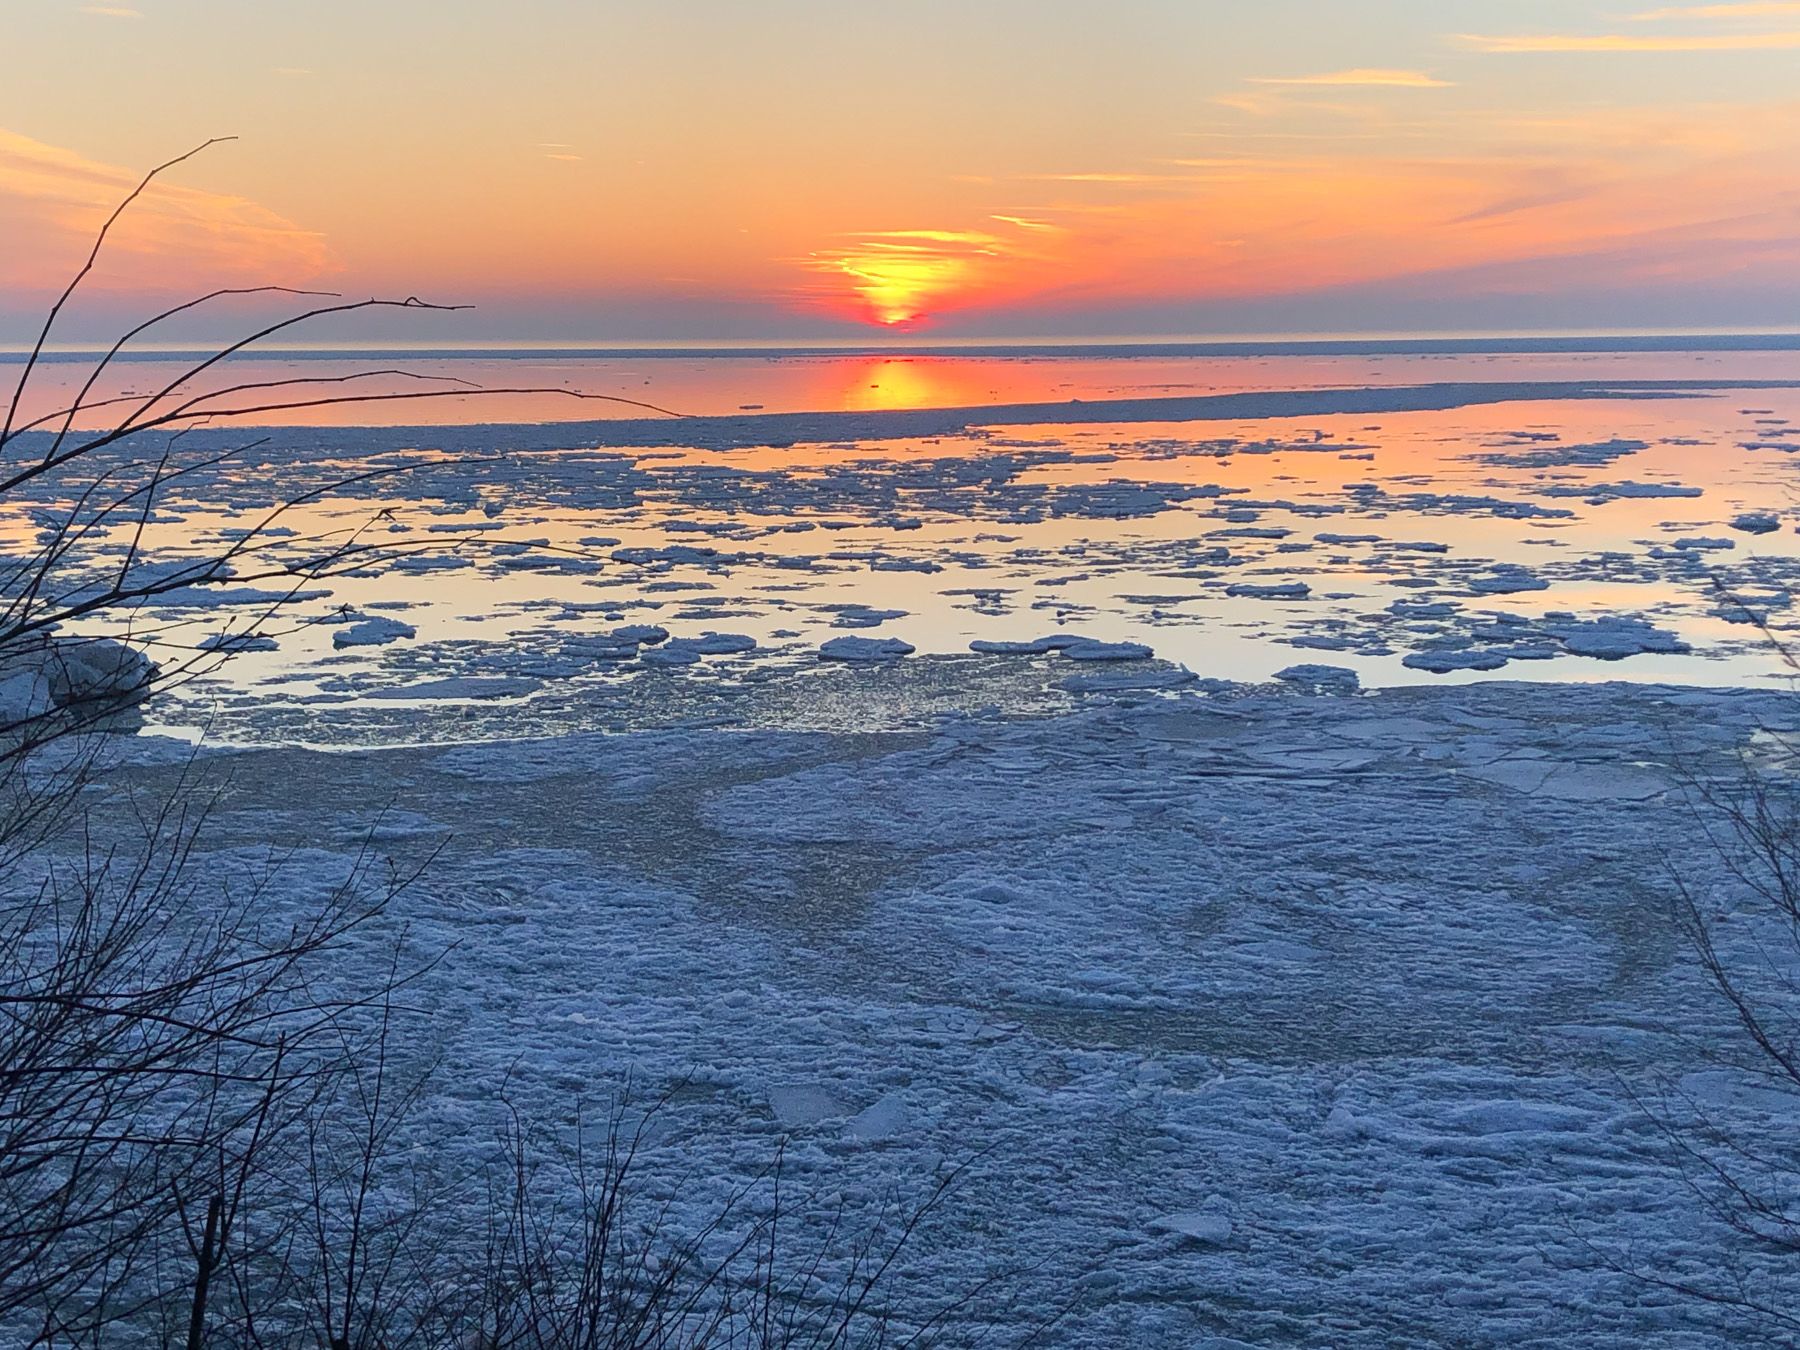 A partially frozen Lake Michigan, blue and orange.